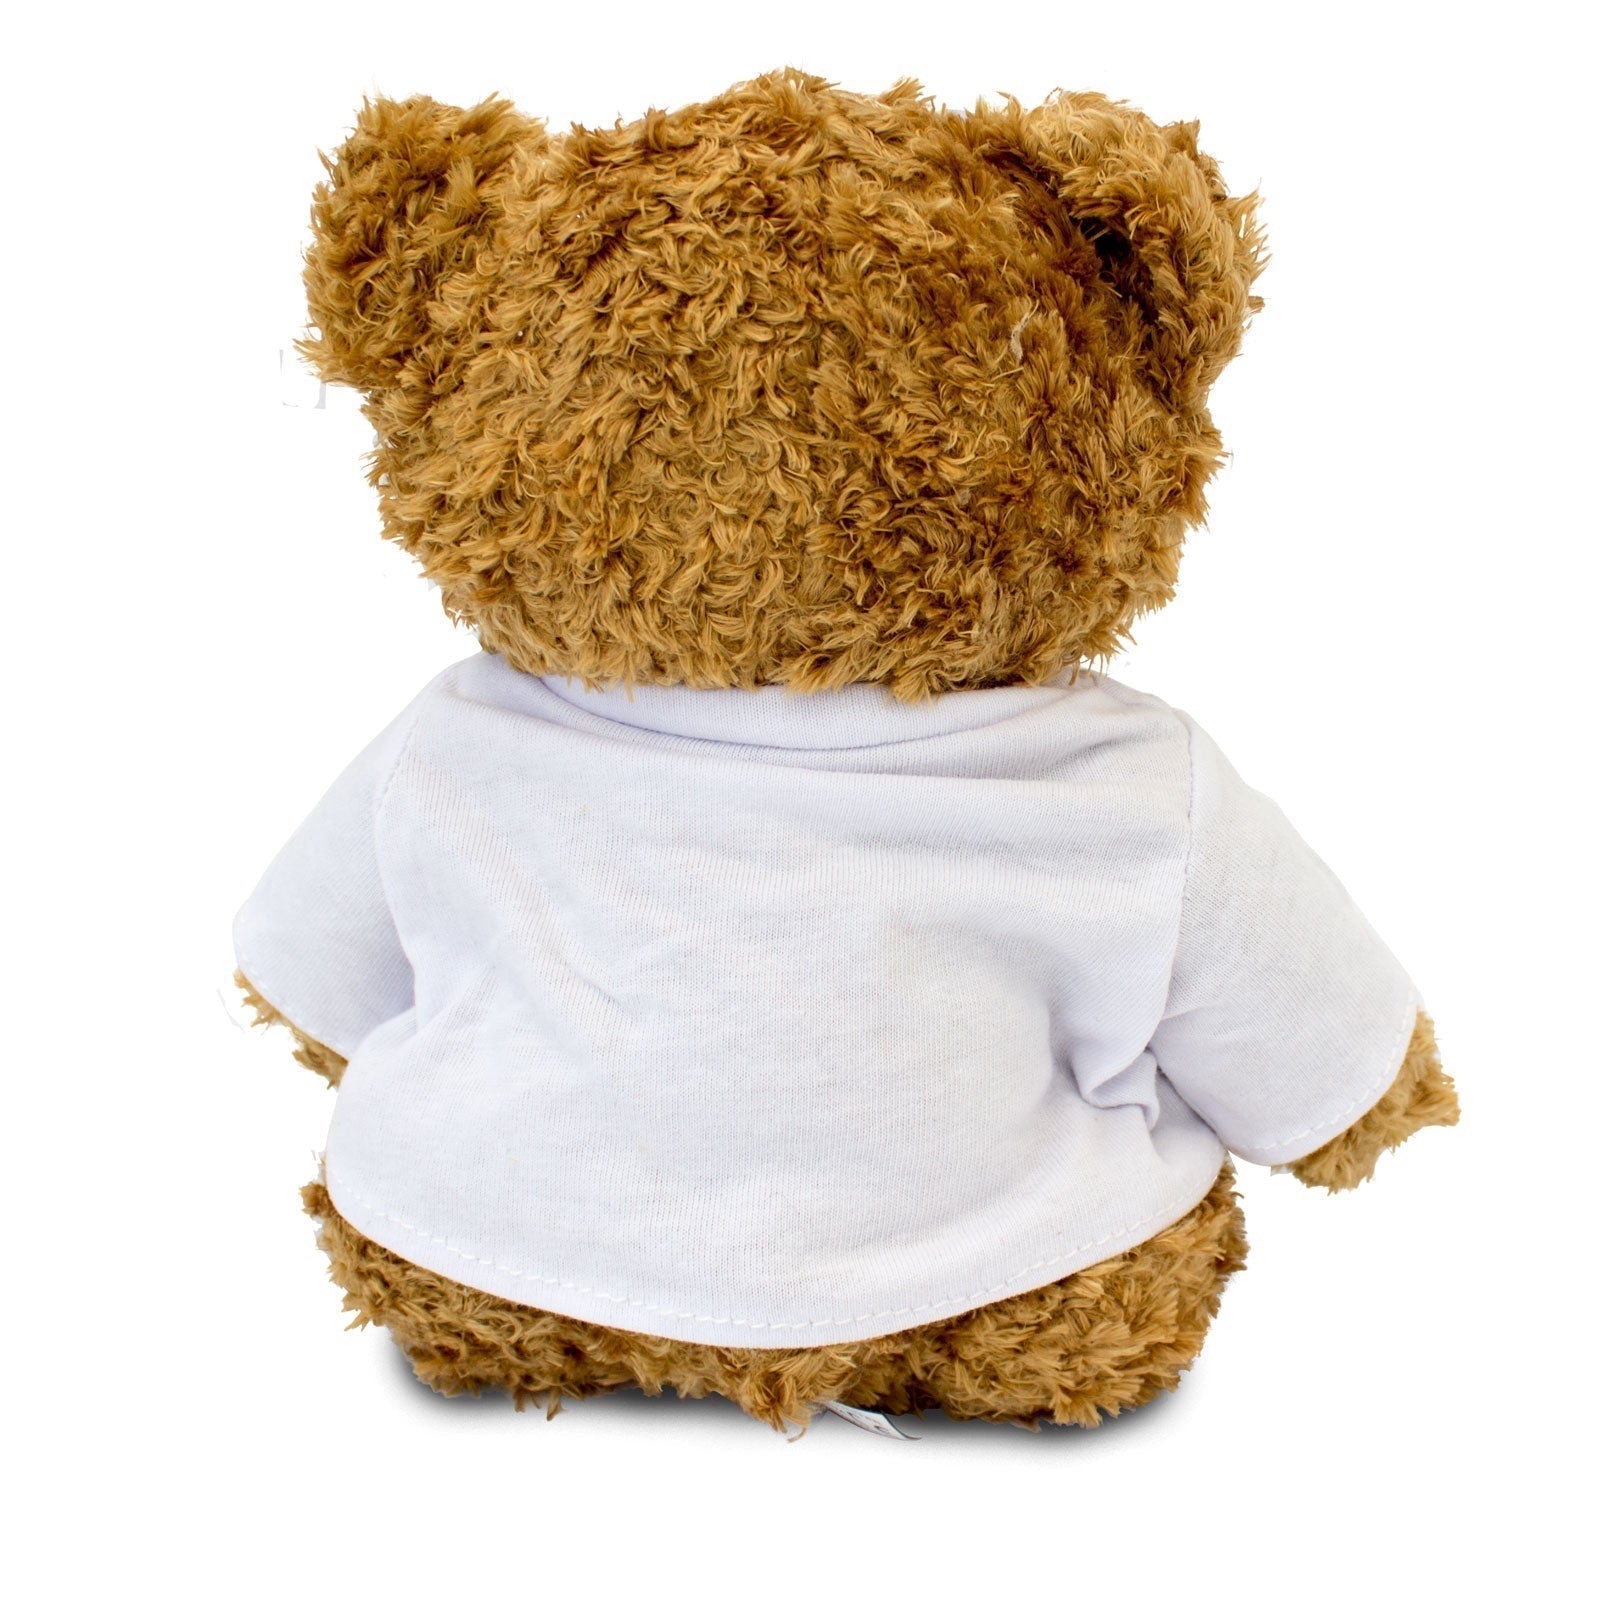 The Greatest Psychiatrist Ever - Teddy Bear